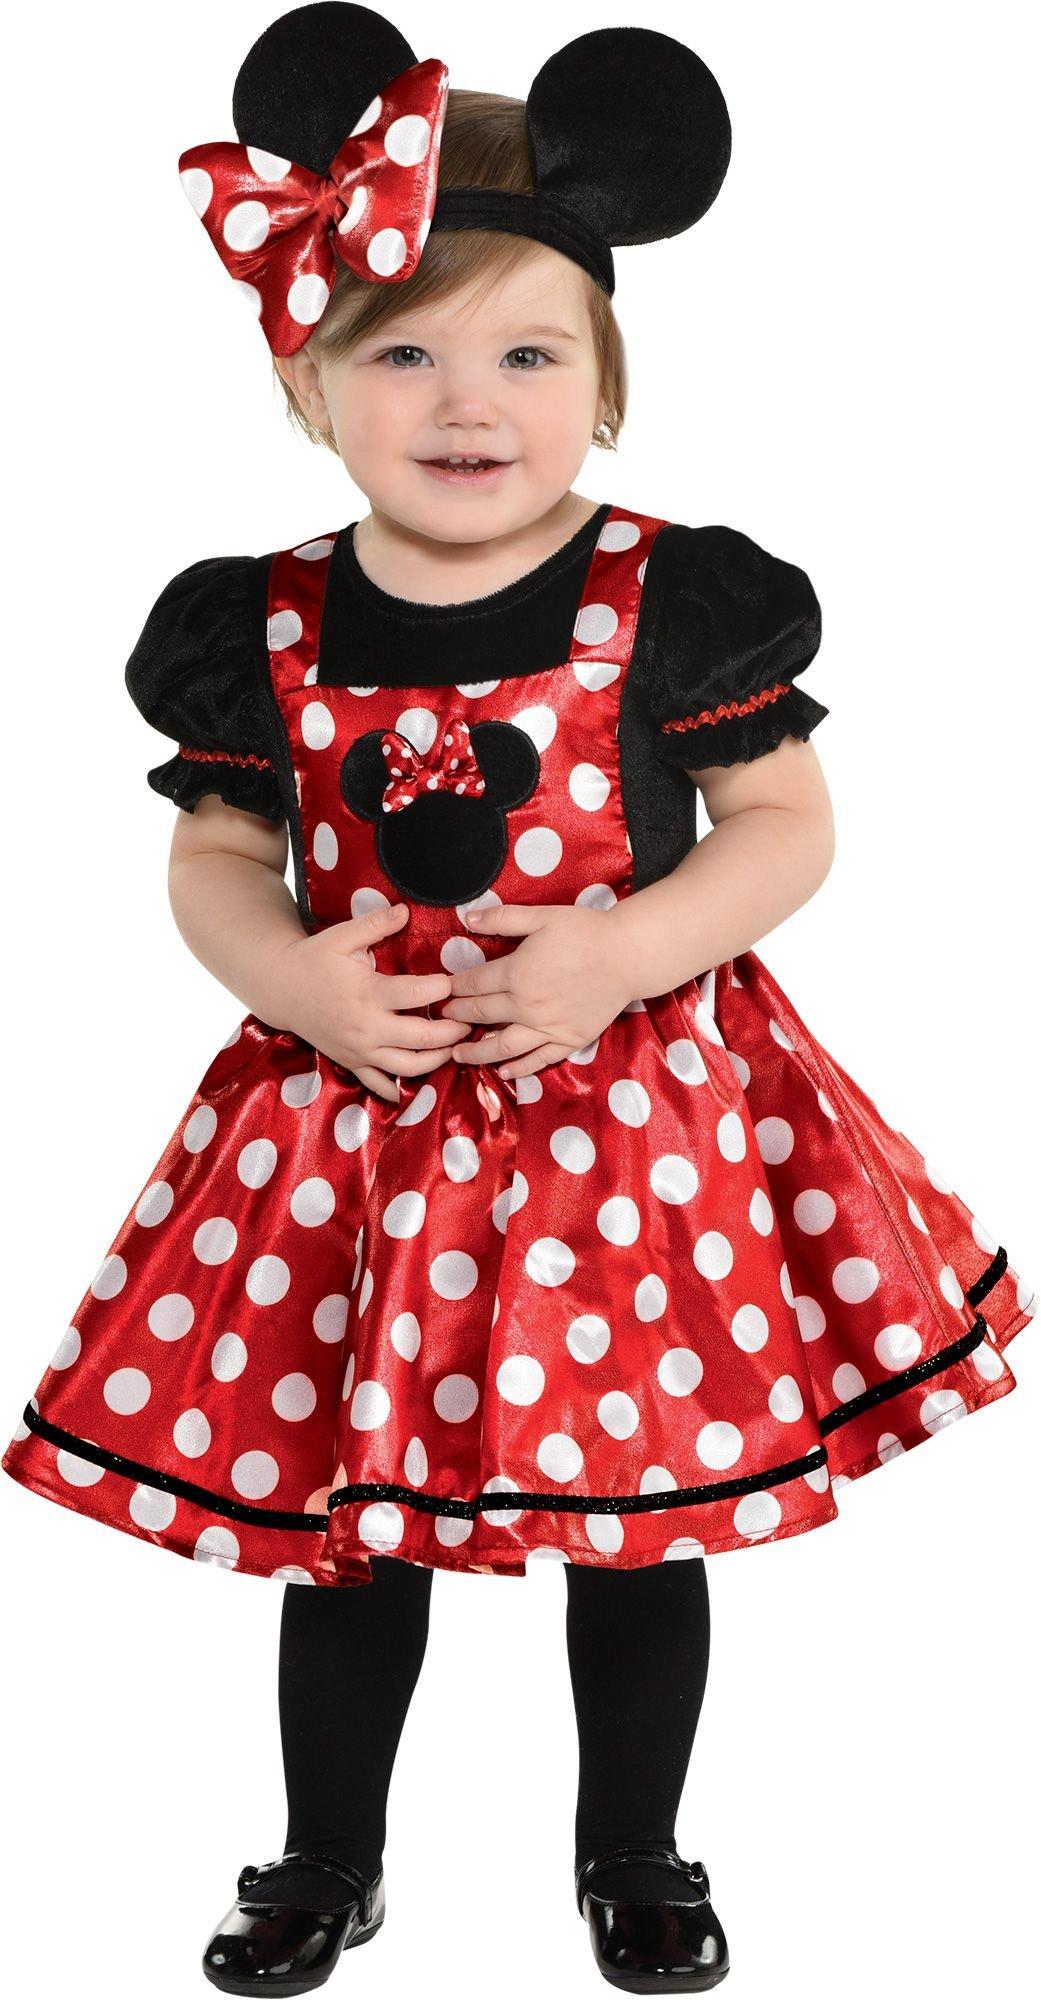 Ikke moderigtigt støj Vælg Child Red Polka Dot Minnie Mouse Costume - Disney | Party City